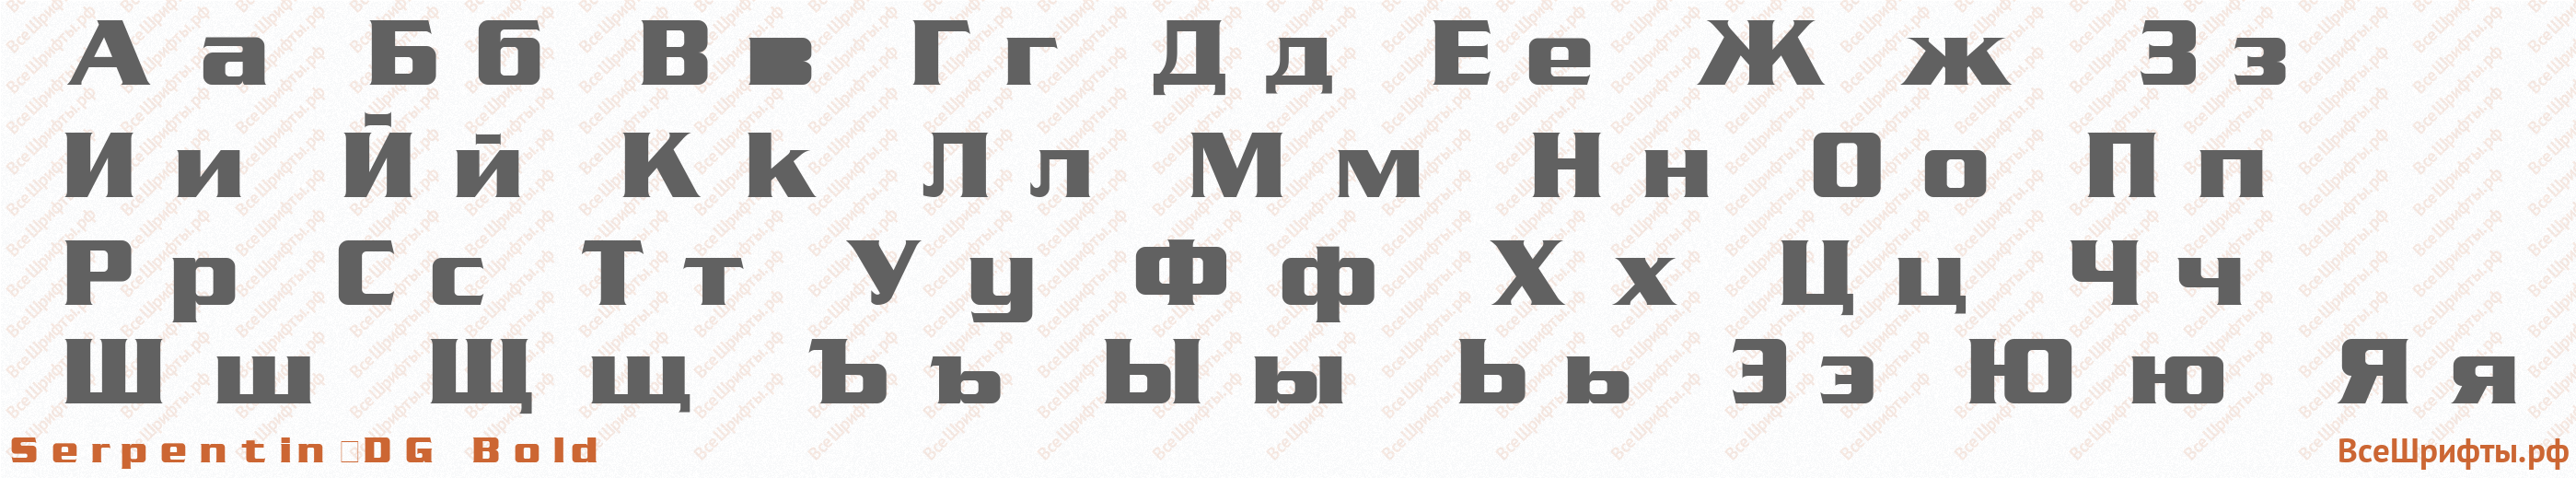 Шрифт Serpentin_DG Bold с русскими буквами